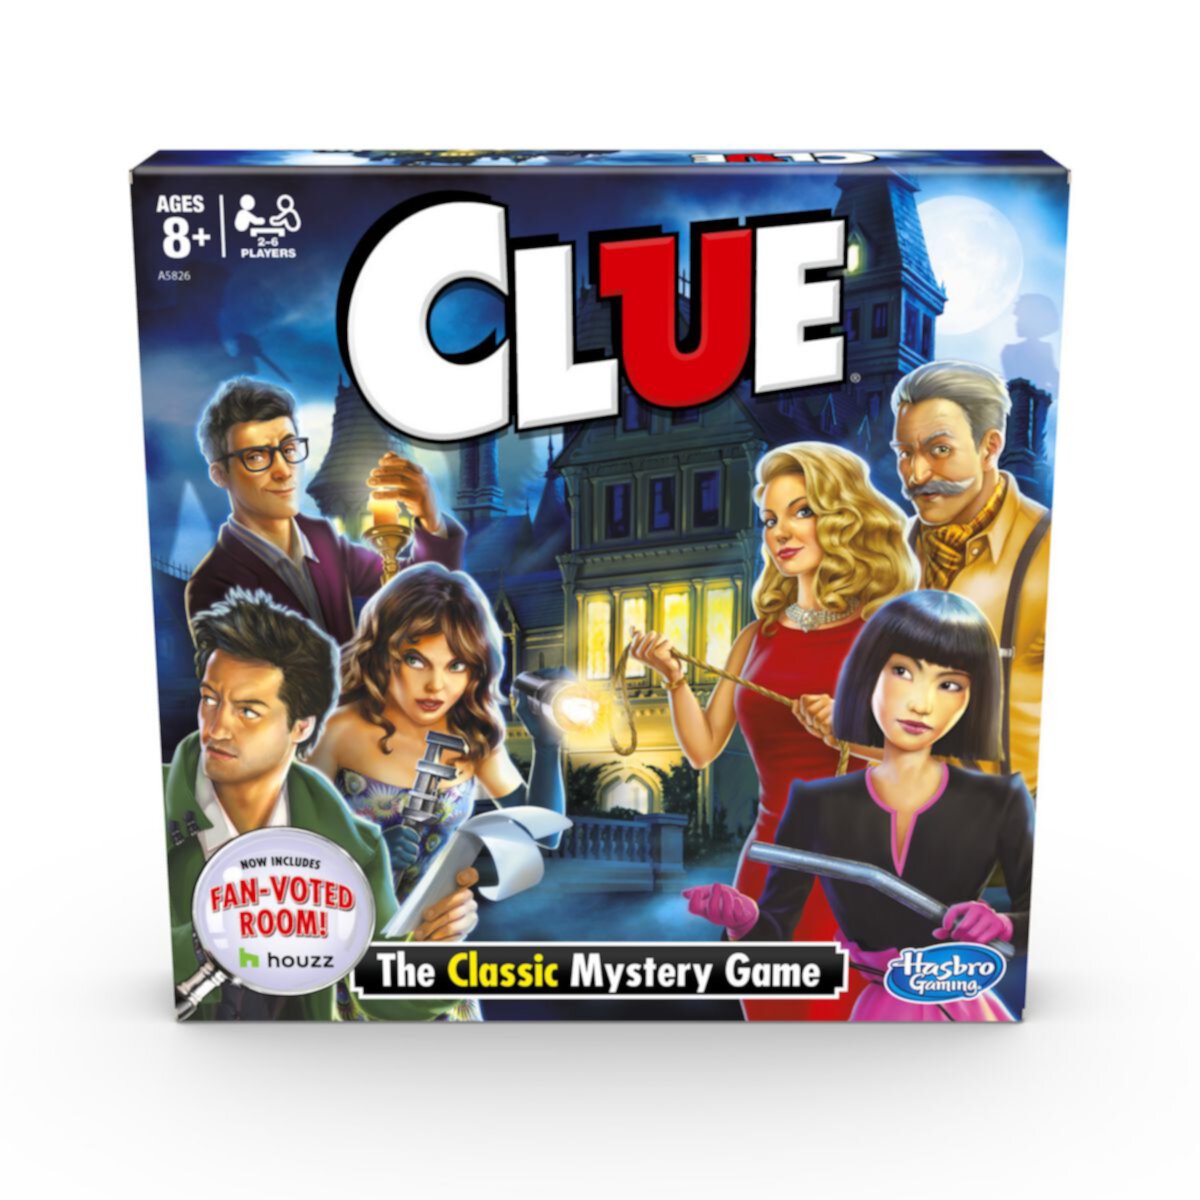 Игра Clue 2013 Edition от Hasbro HASBRO